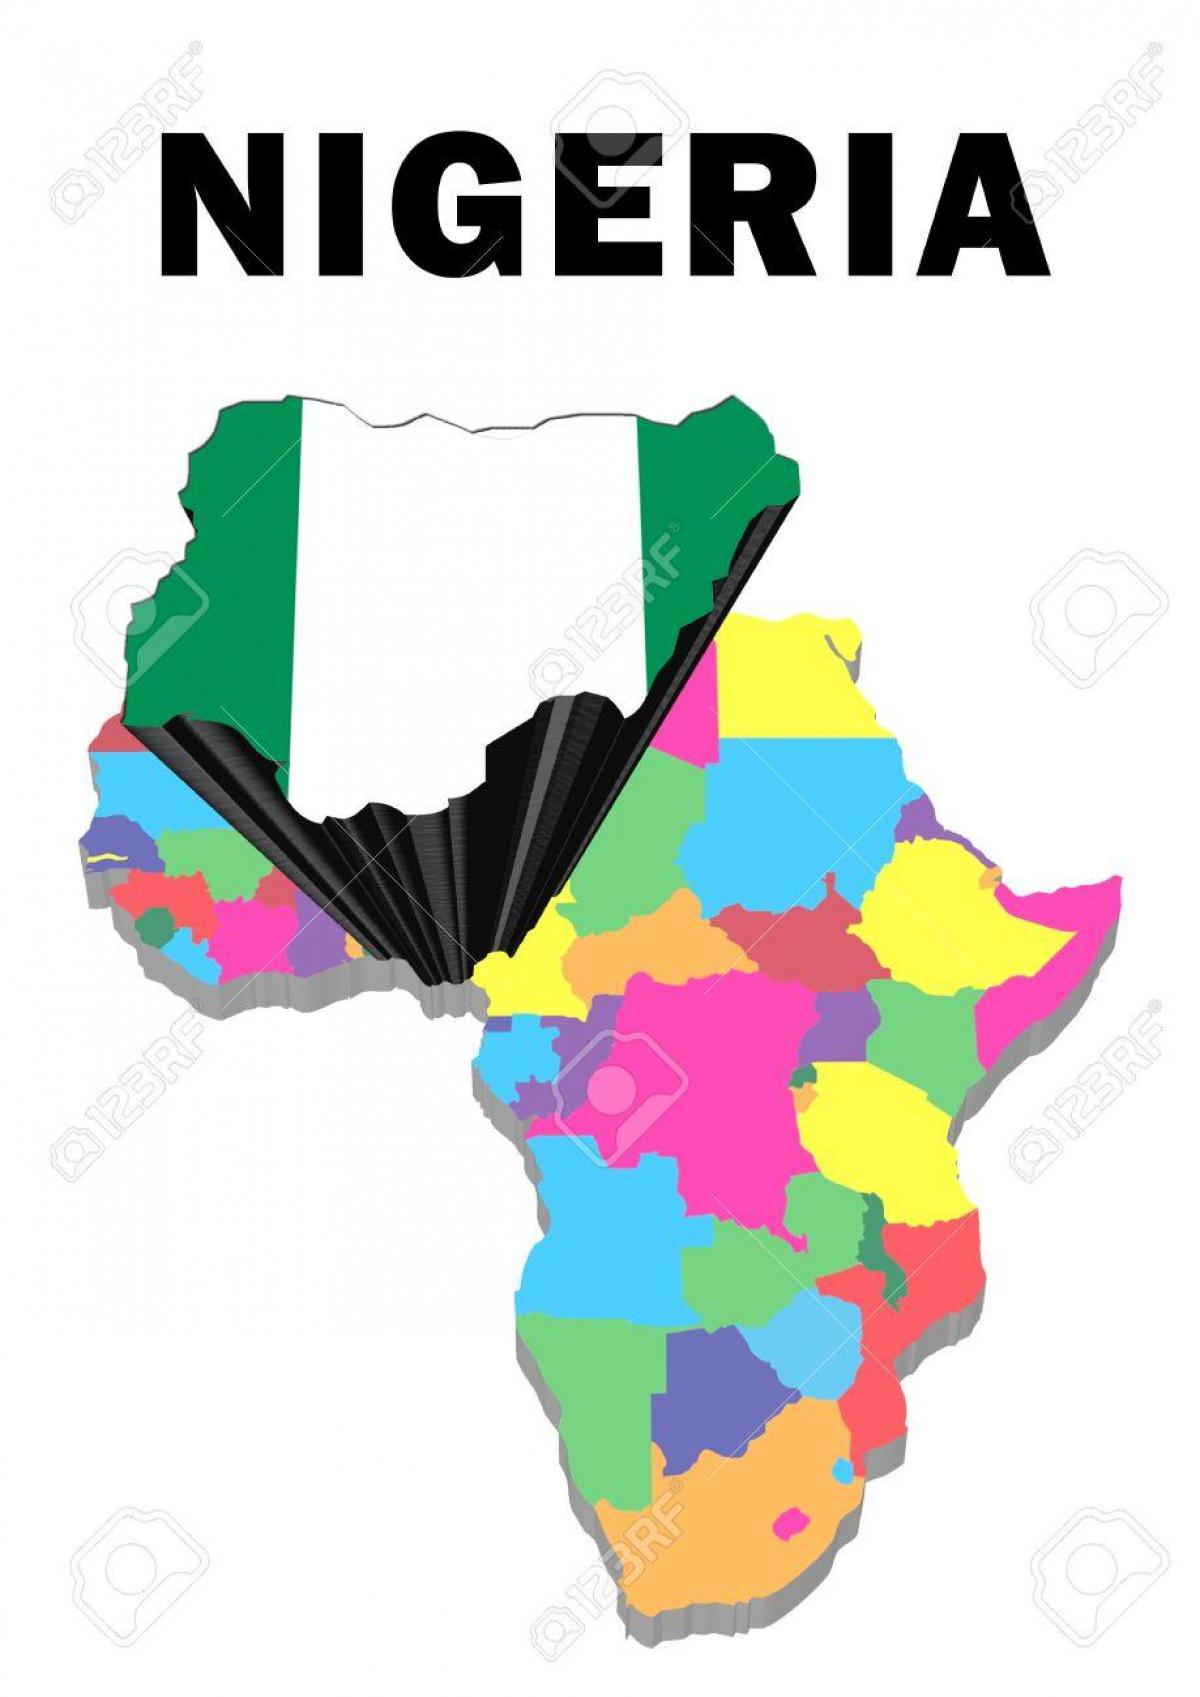 карта Африке са нигерией нагласио